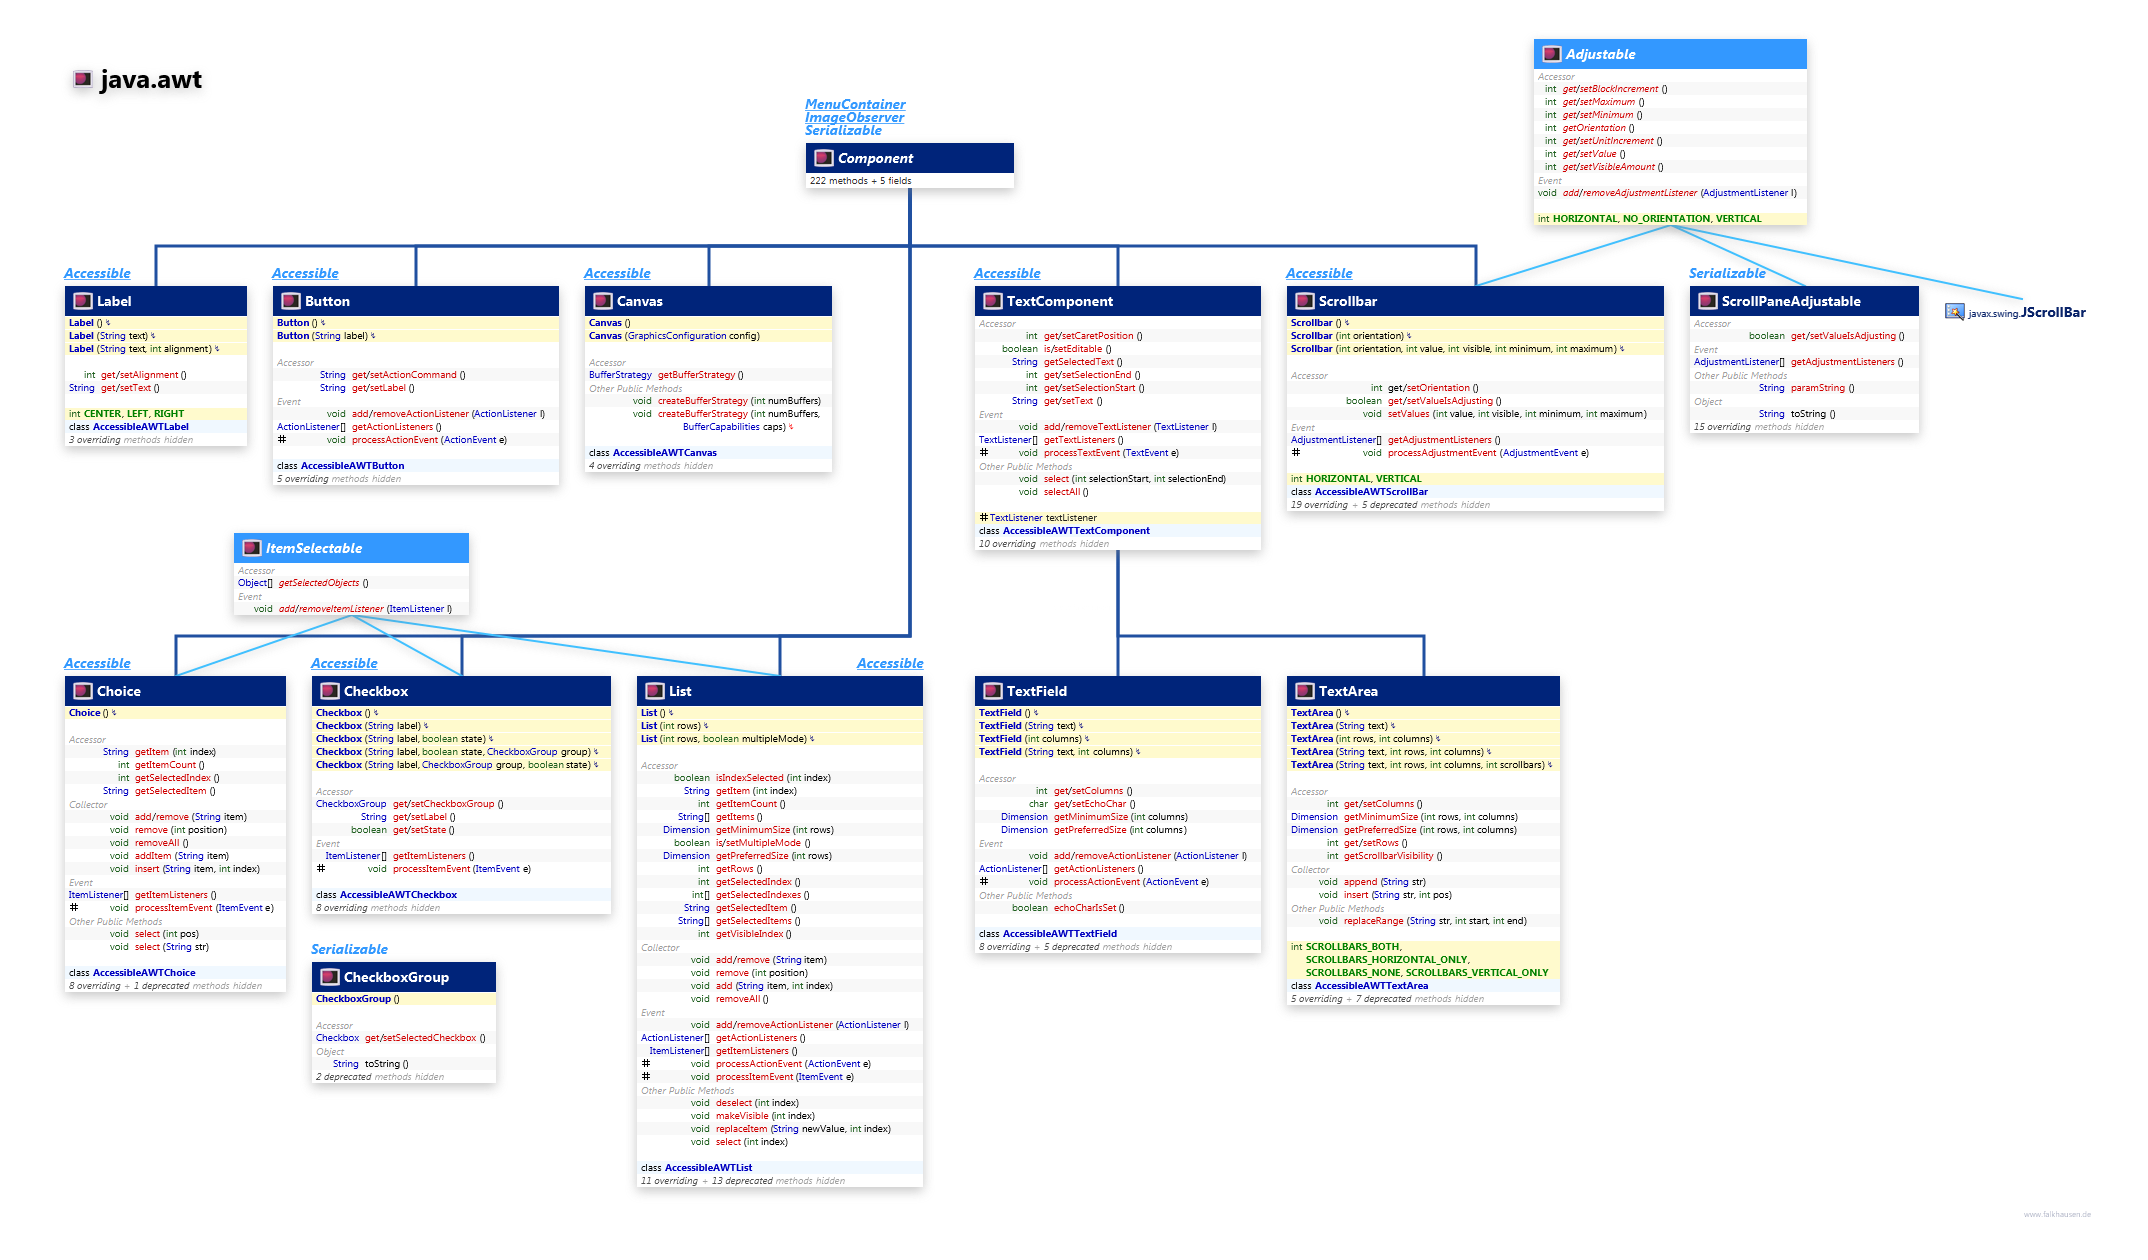 java.awt Components class diagram and api documentation for Java 7